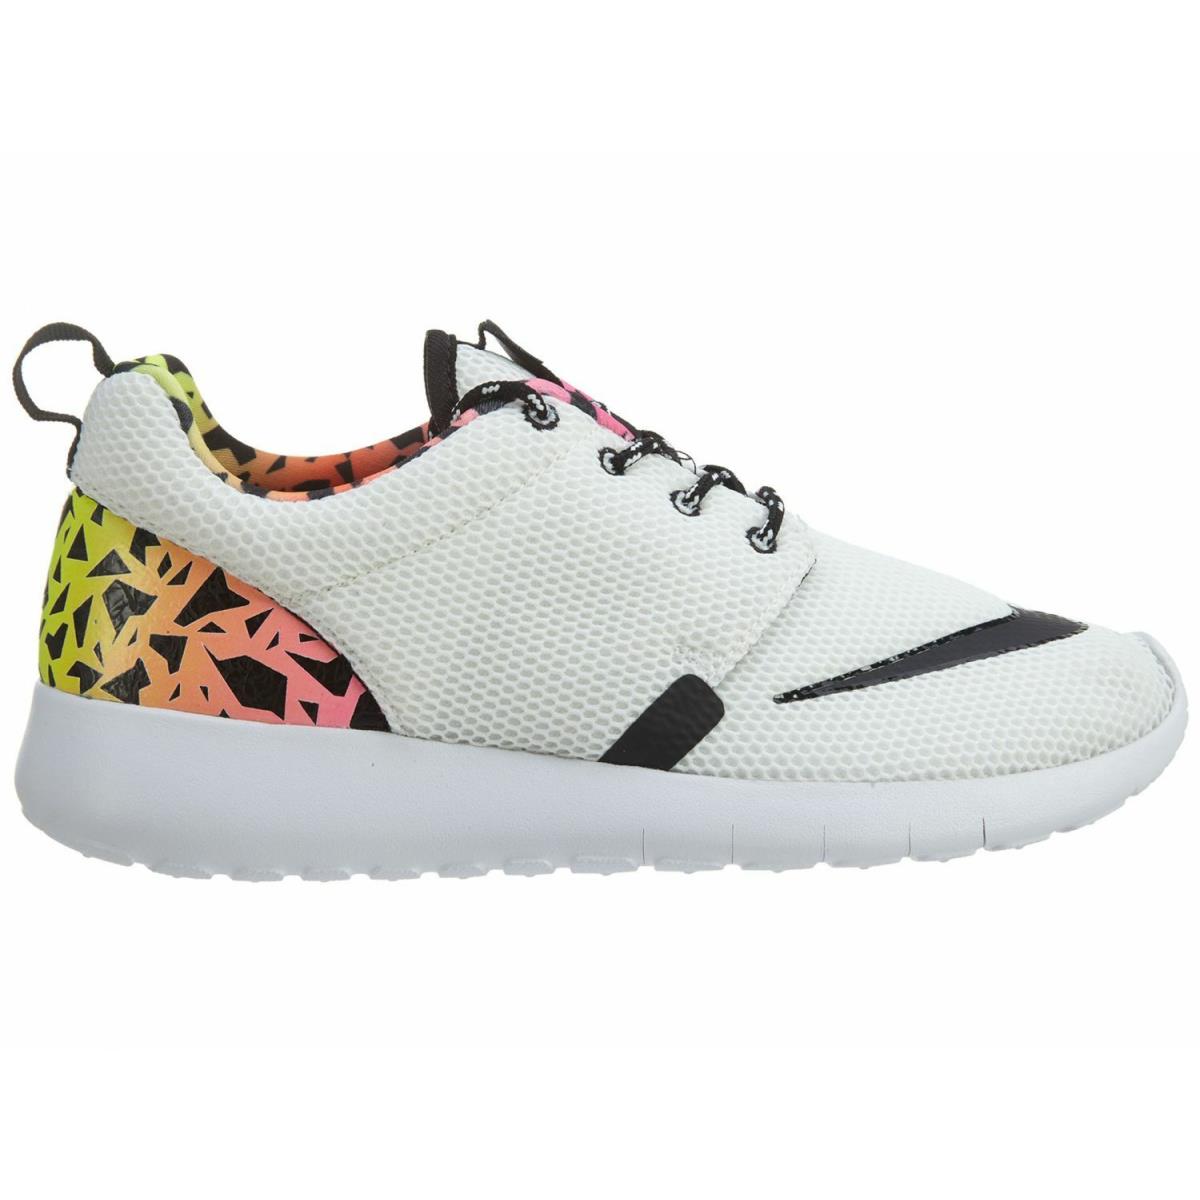 Nike Roshe One FB Big Kids 810513-100 White Black Volt Pink Blast Shoes Size 7